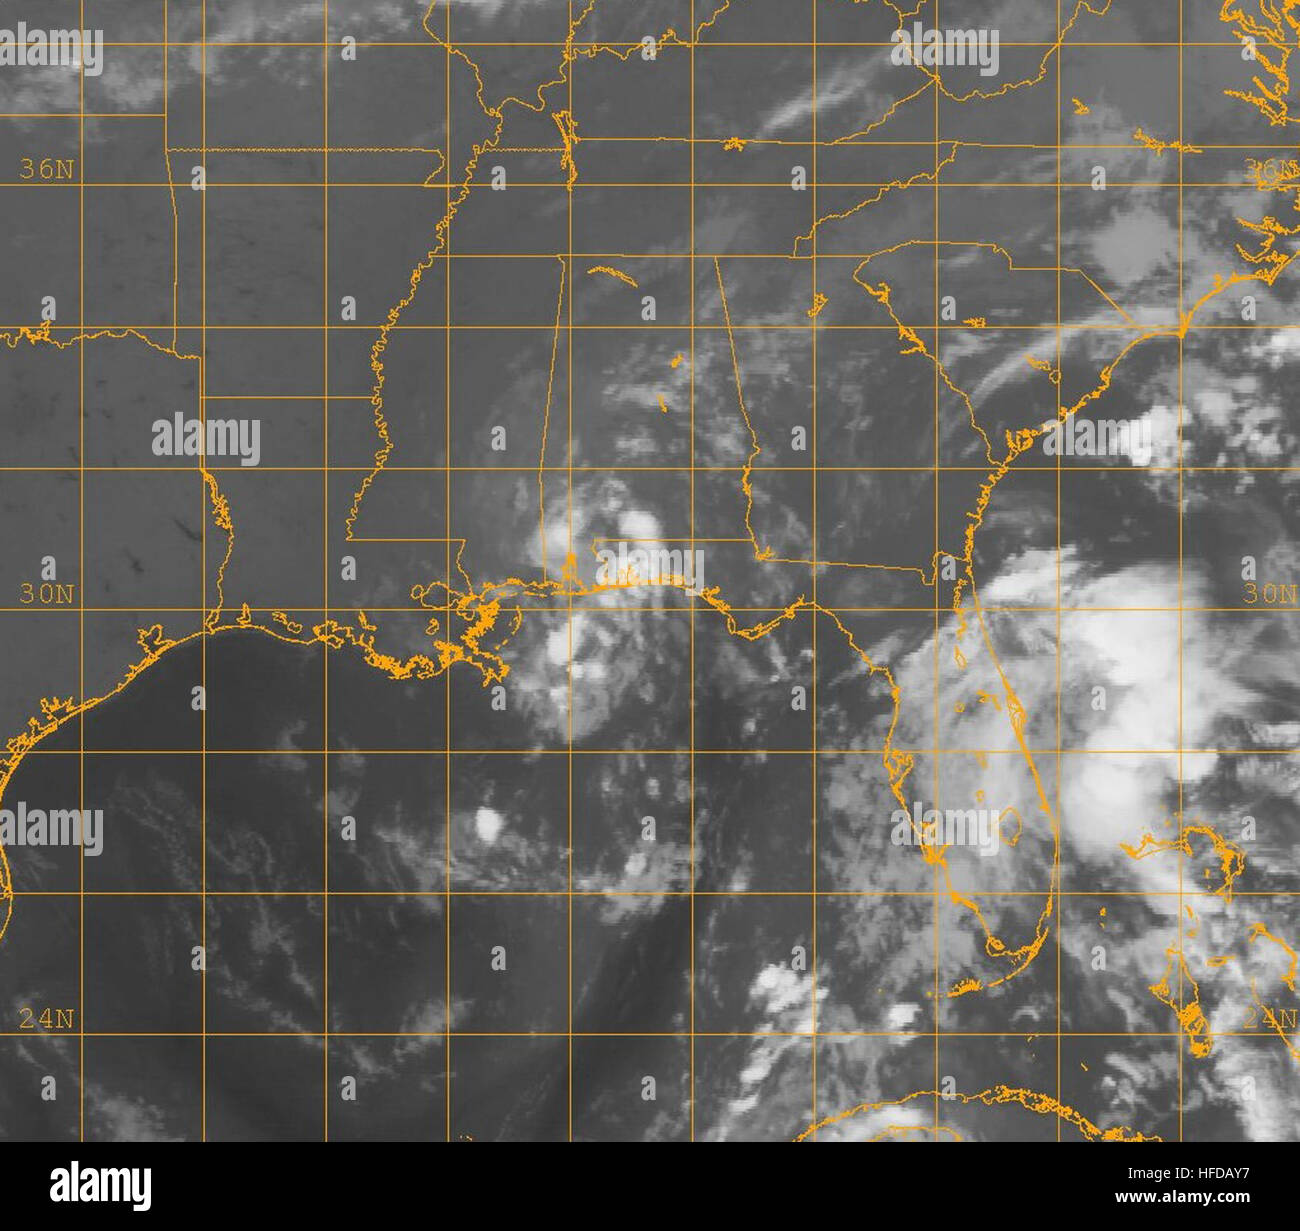 Tropical Depression 1025kts-1005mb-304N-867W.100pc Stock Photo